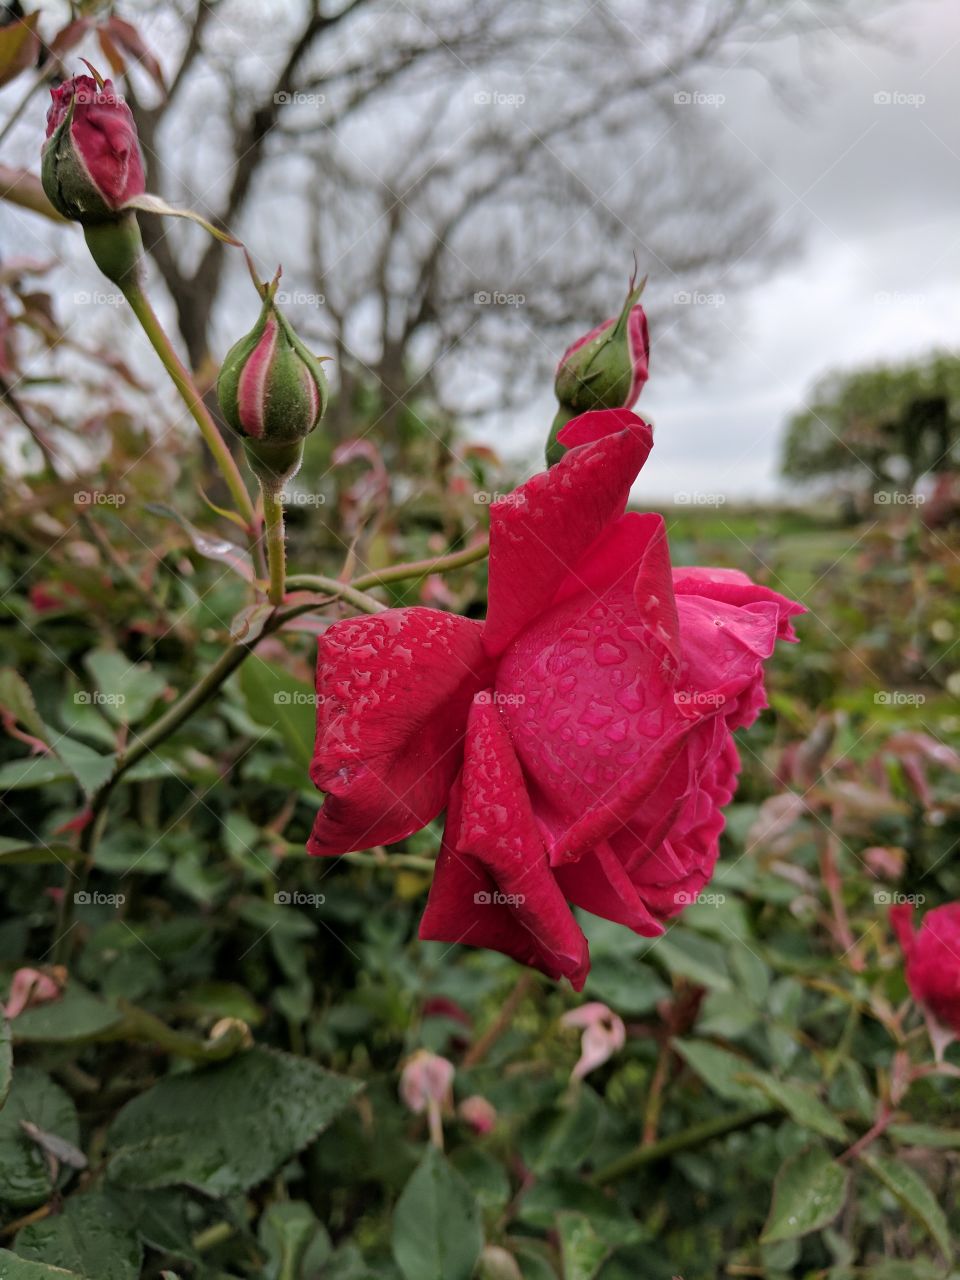 soggy rose